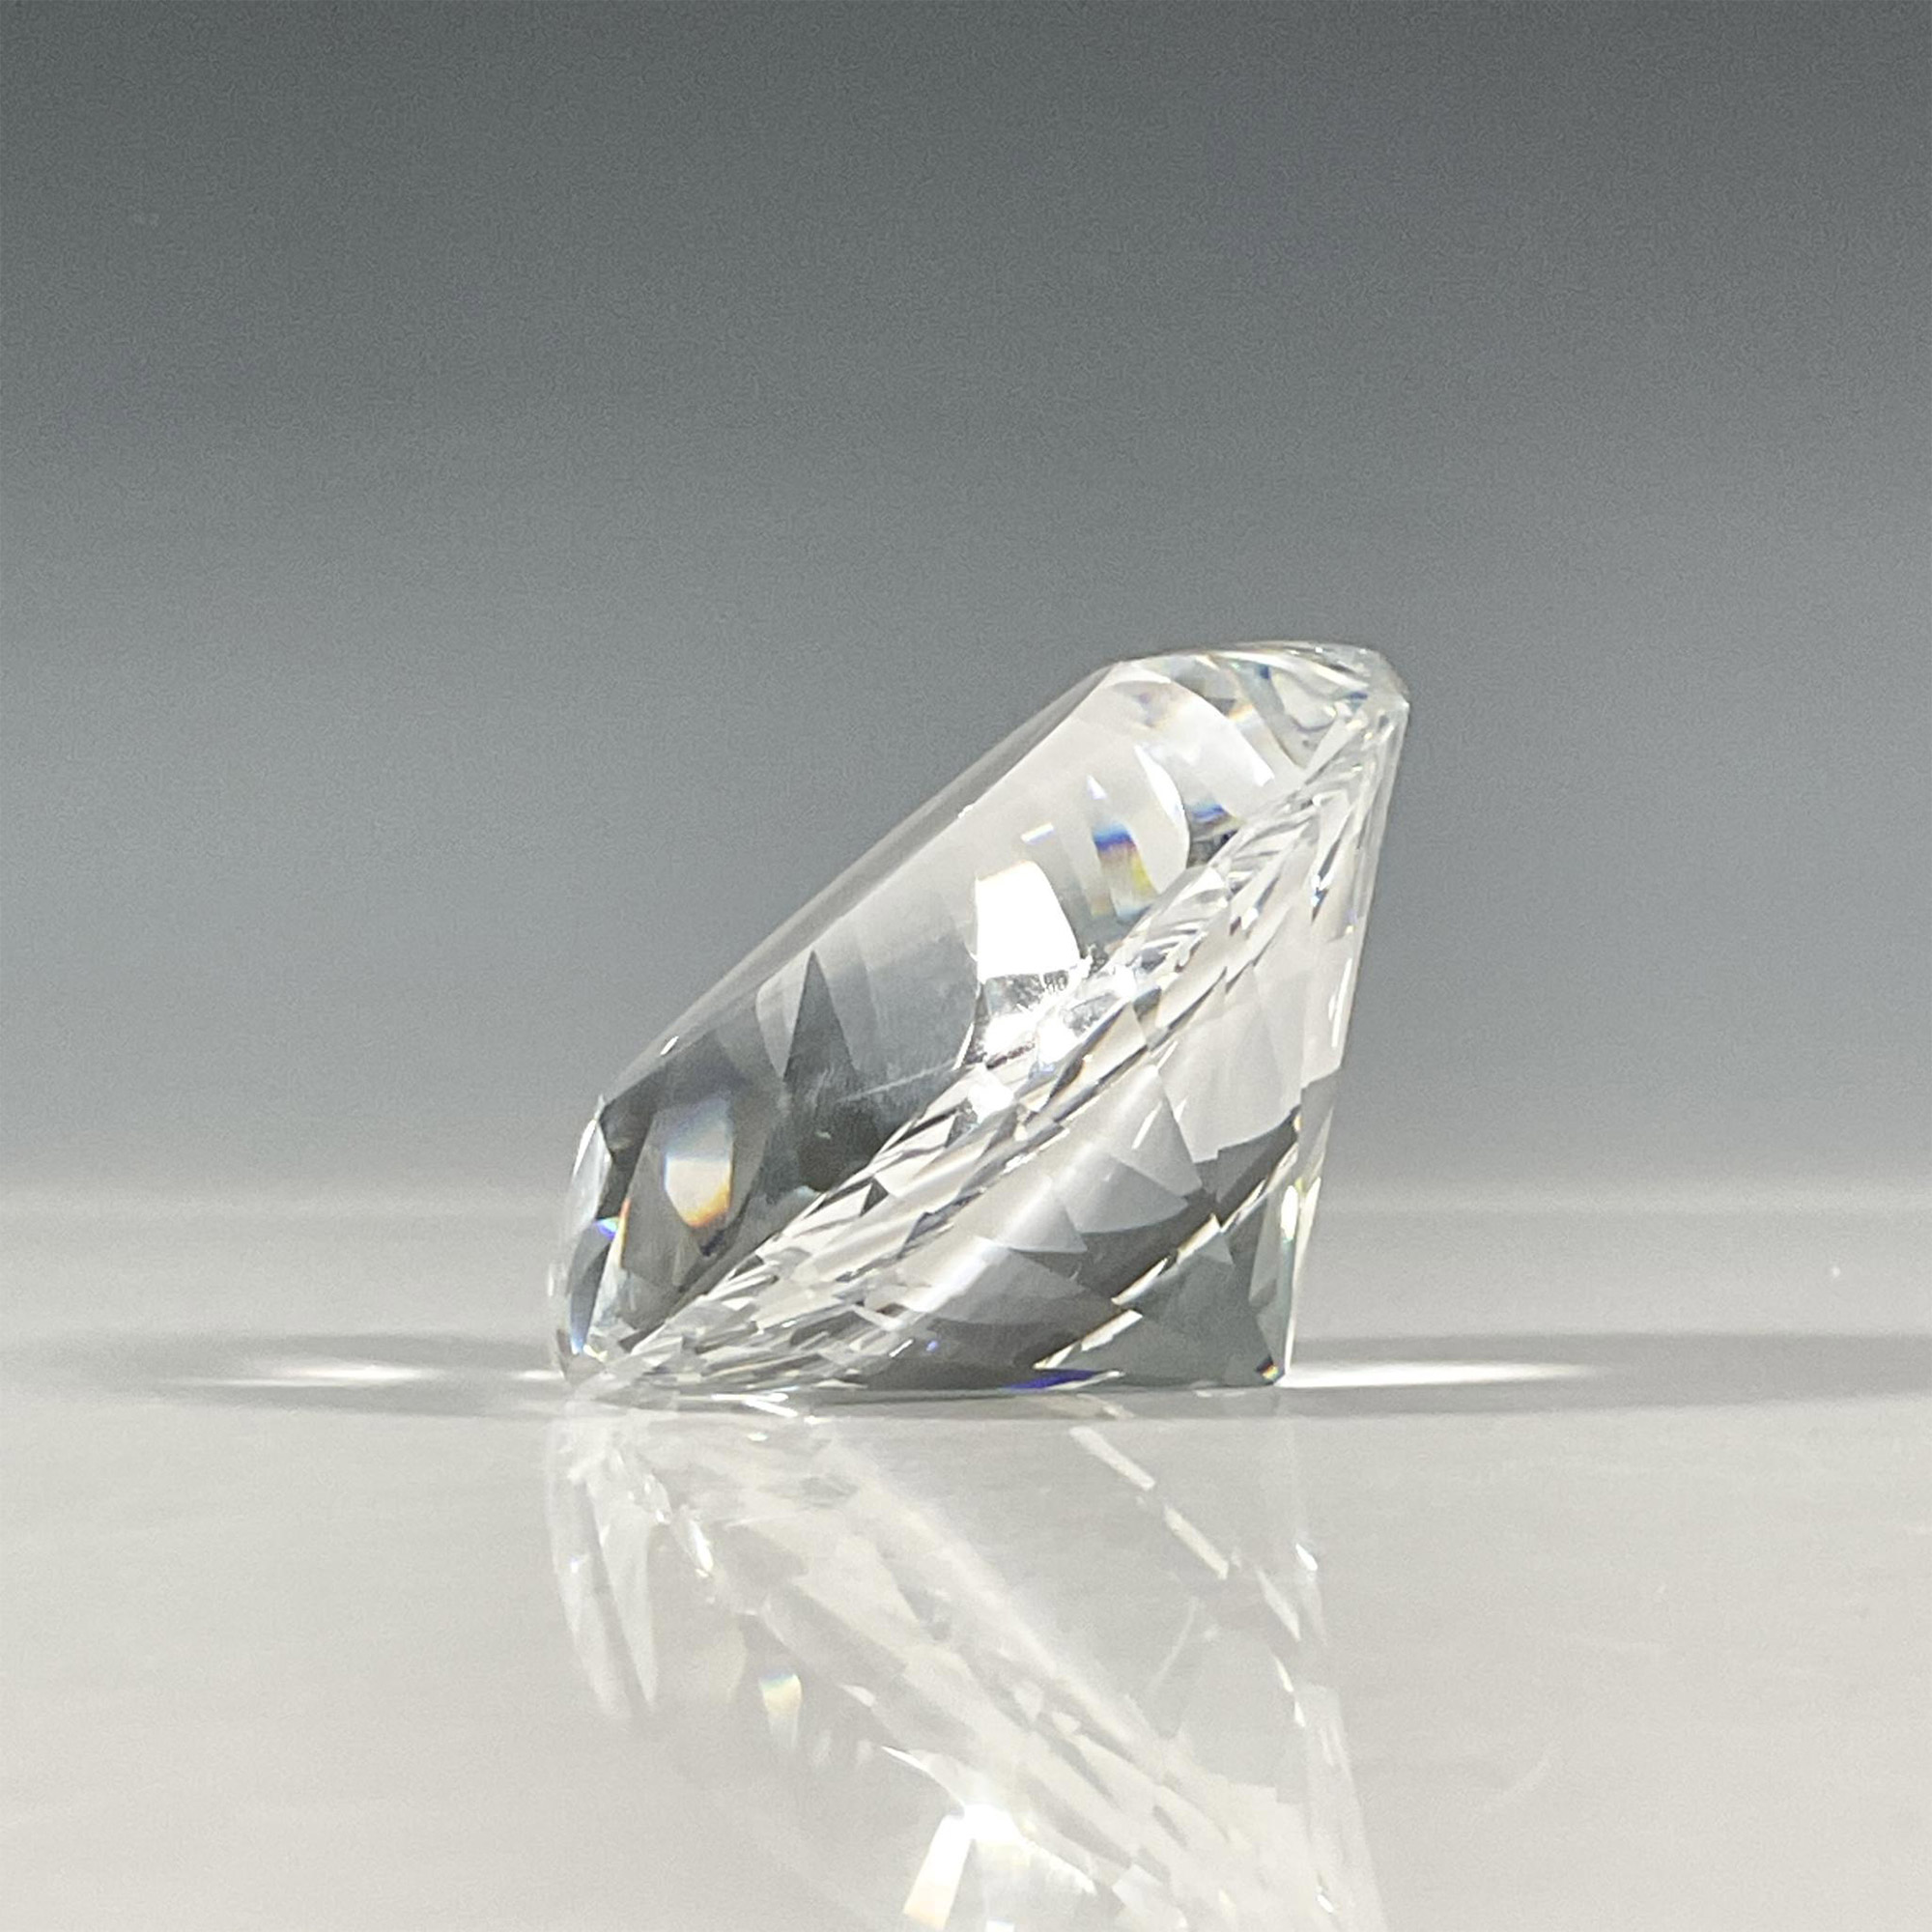 Swarovski Crystal Paperweight, Small Chaton - Image 4 of 6